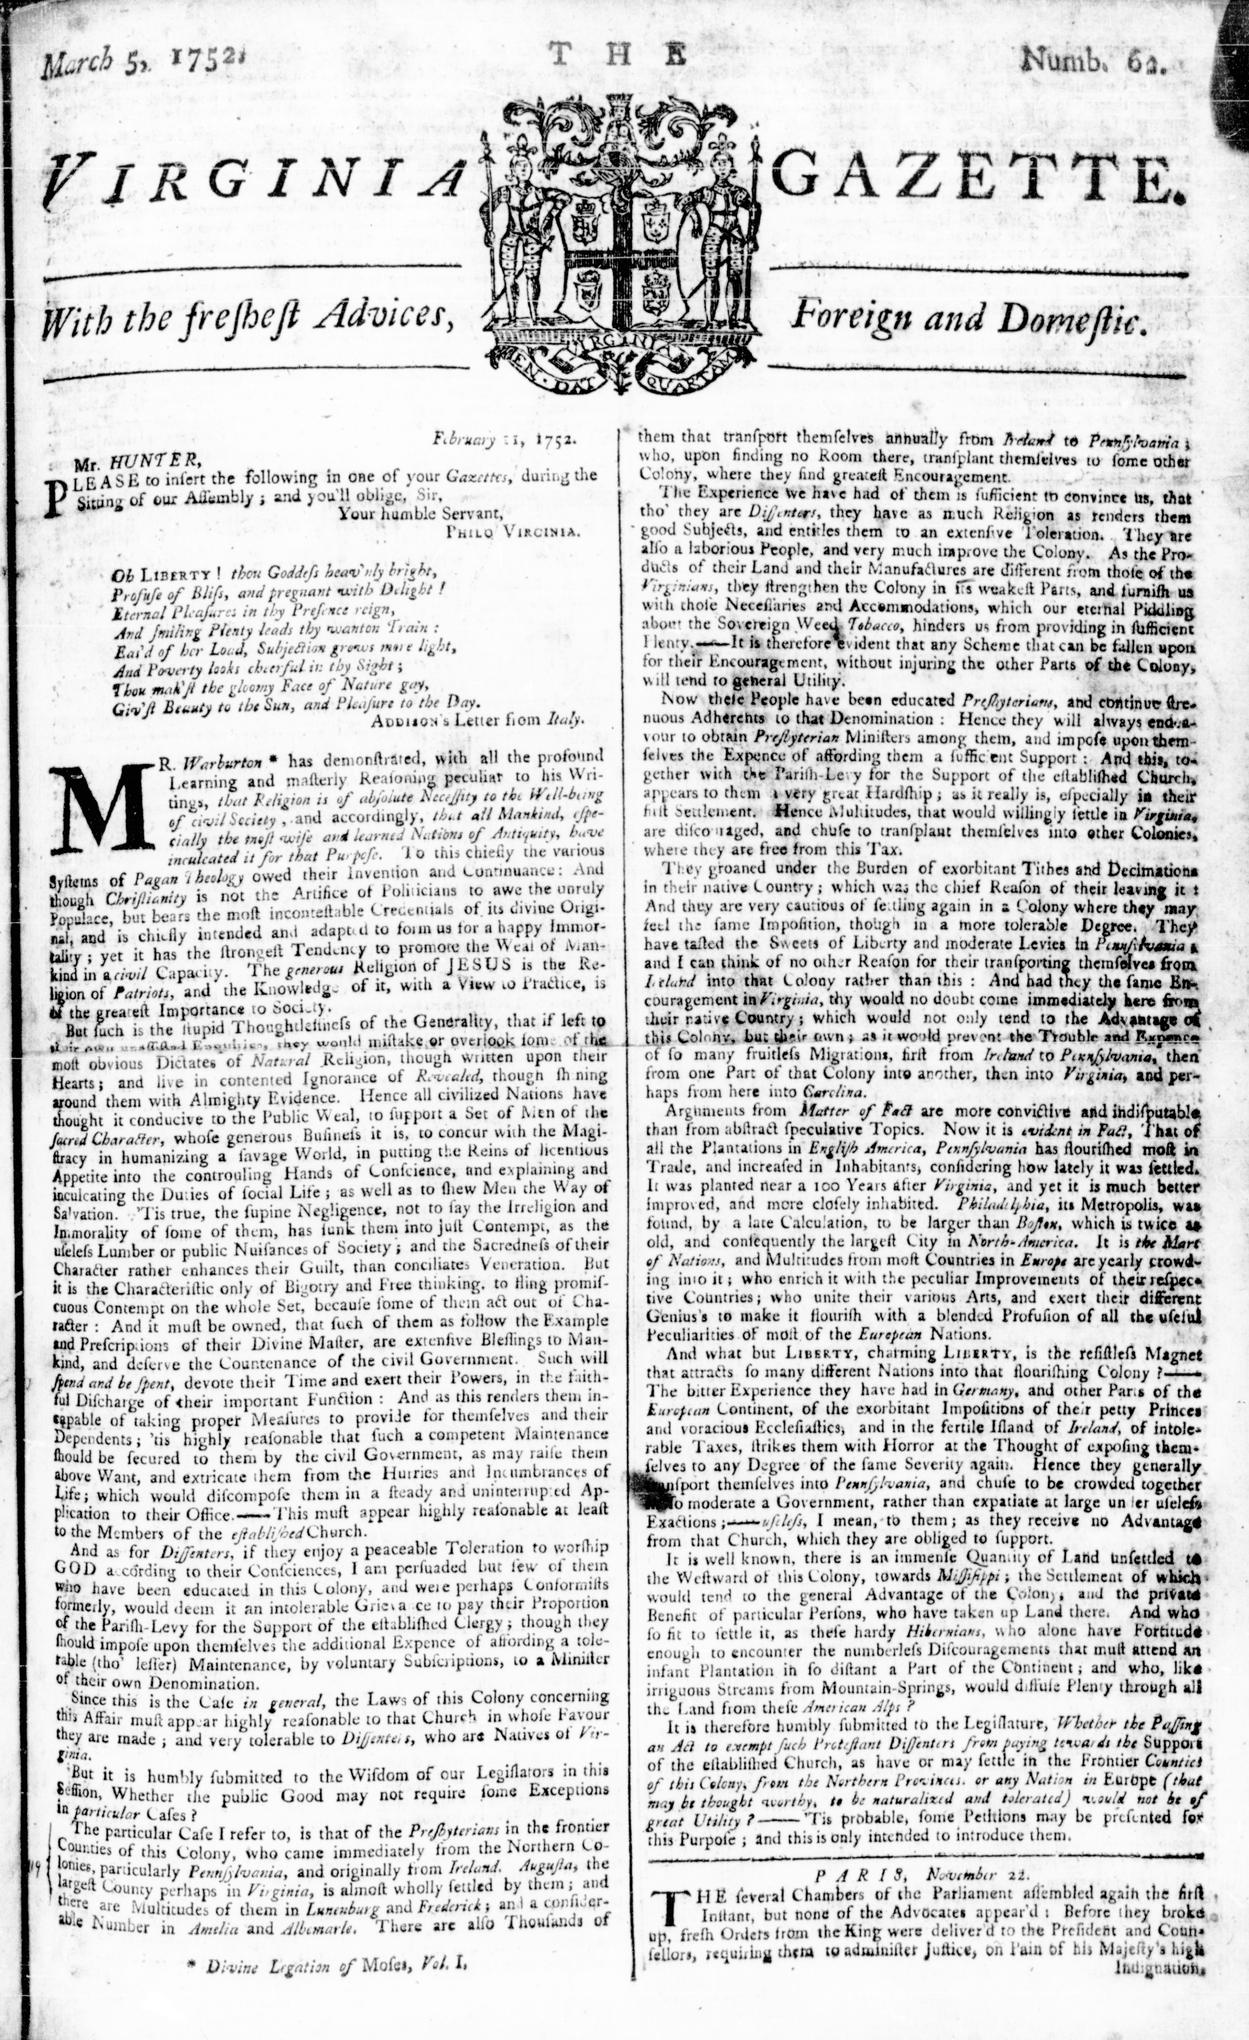 Virginia Gazette Hunter March 05 1752 Pg 1 The Colonial